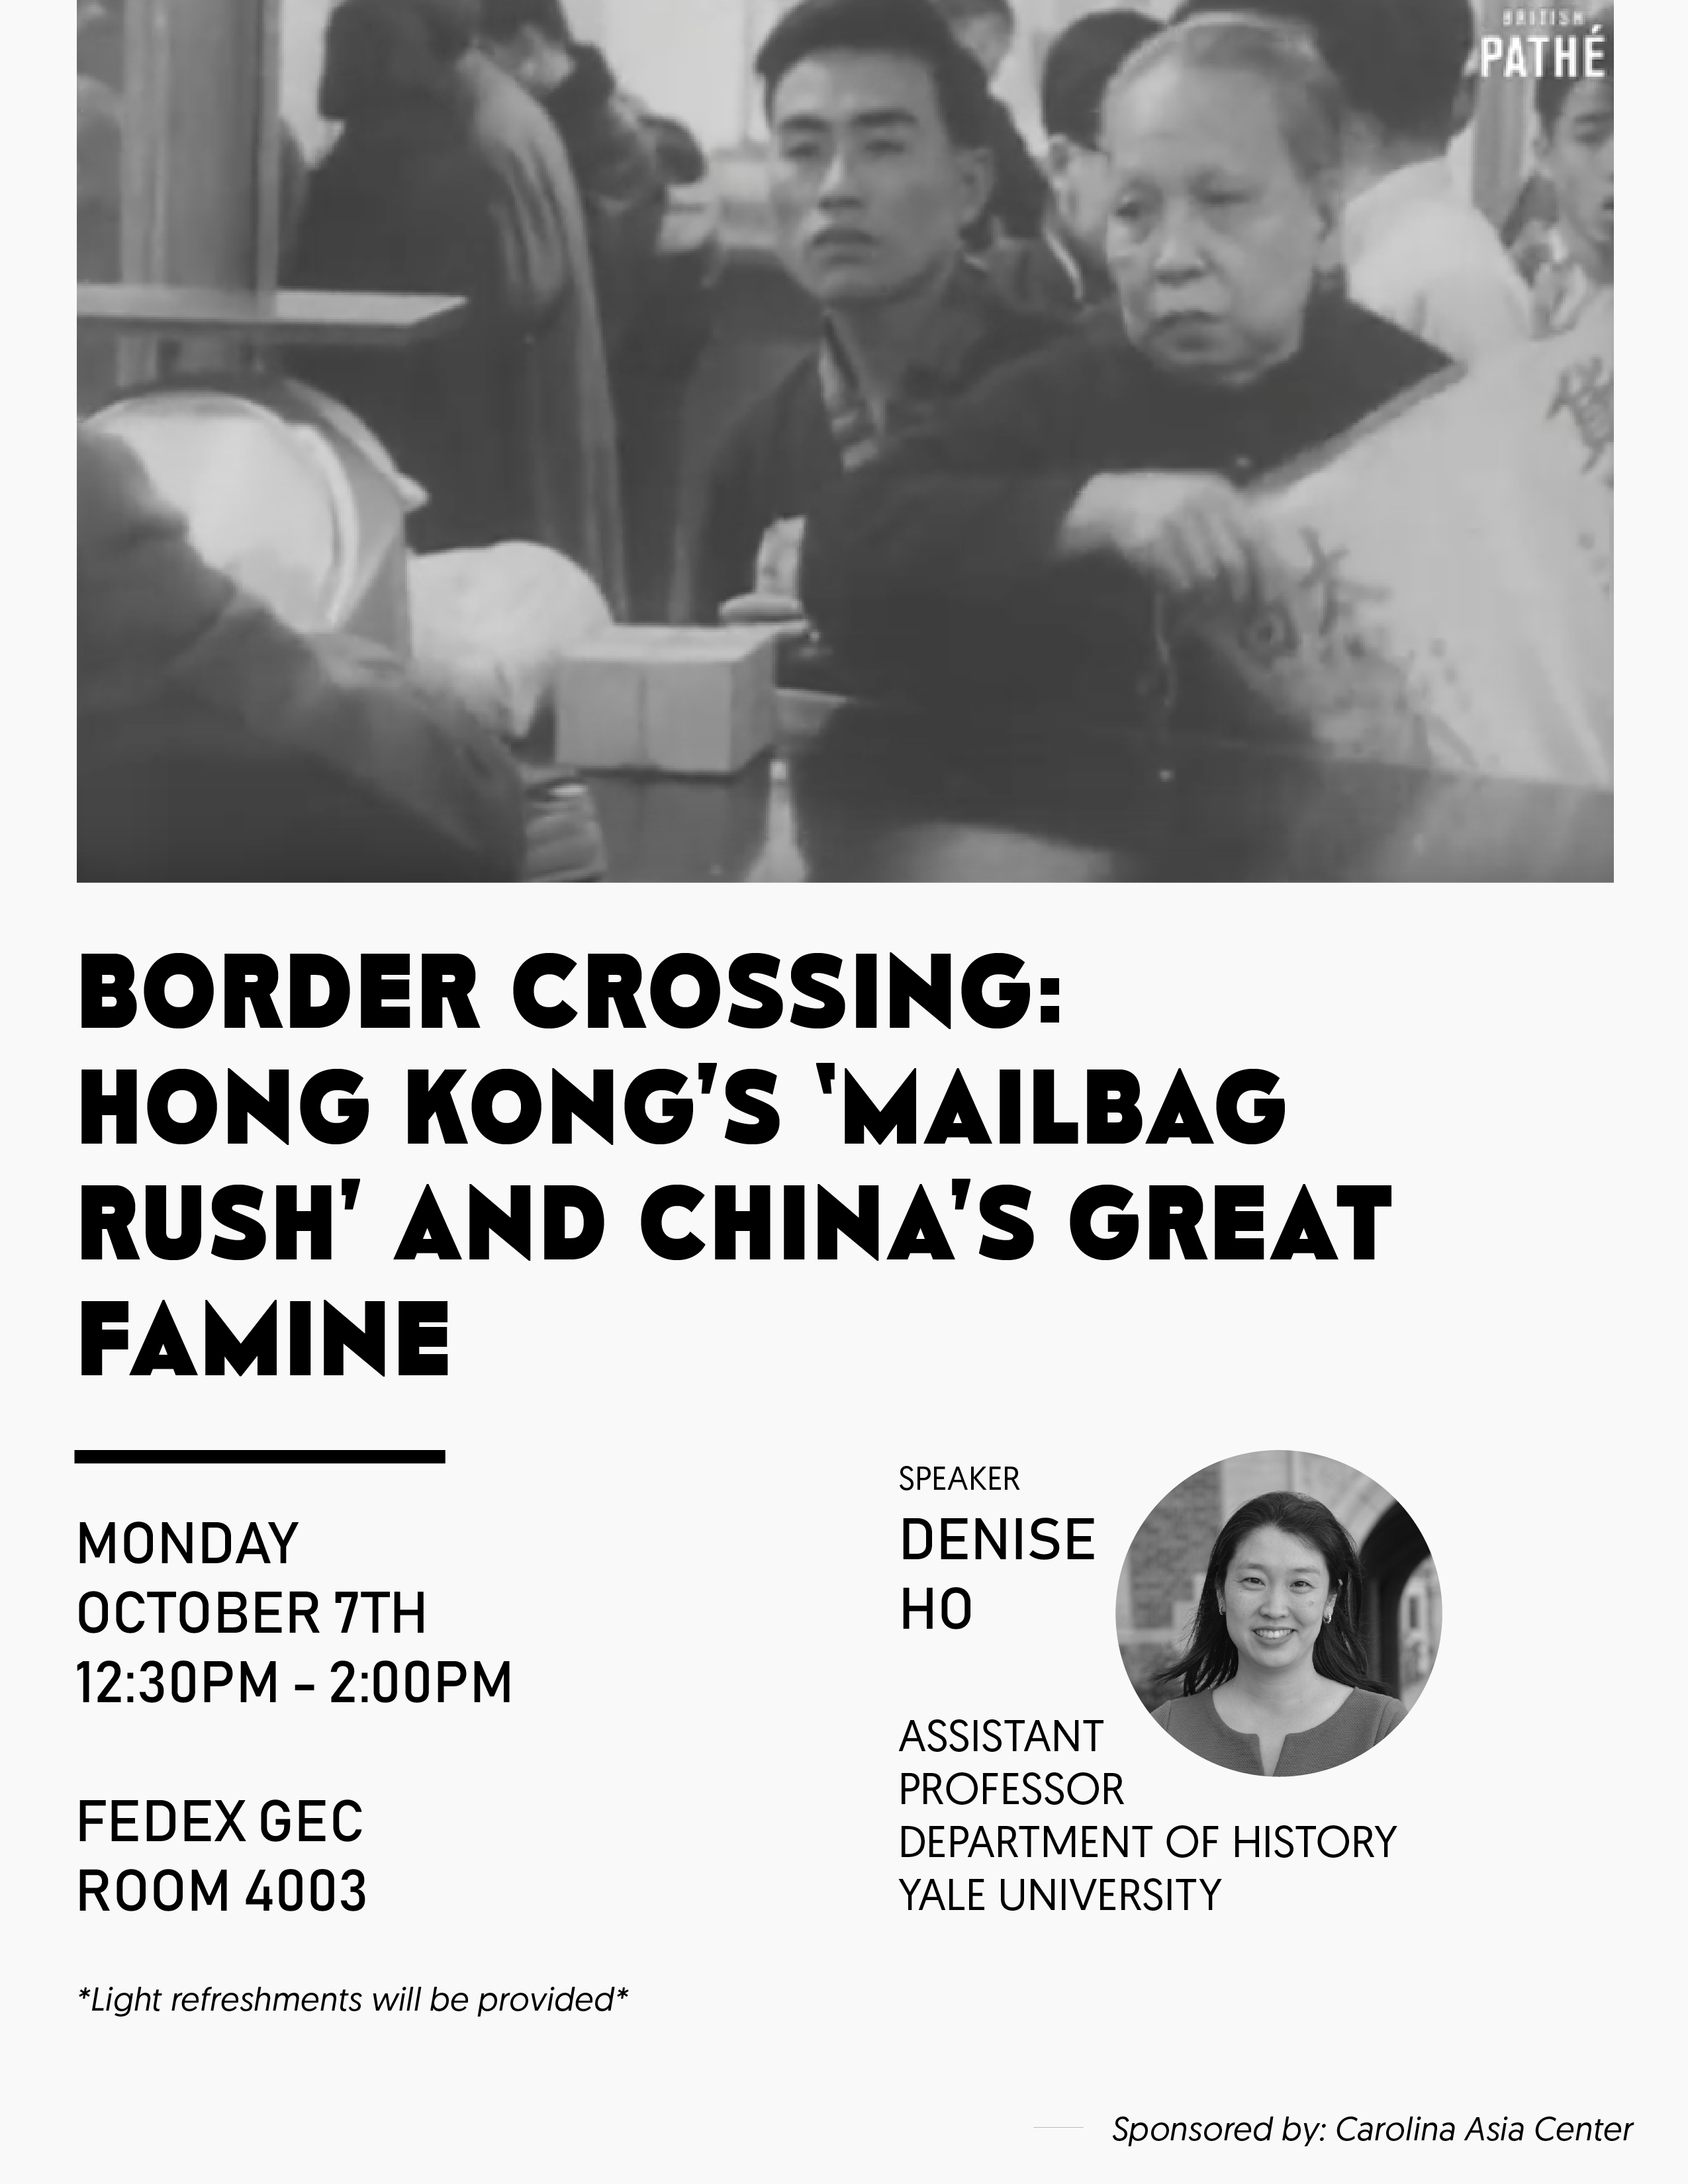 Border Crossing: Hong Kong's Mailbag Rush and China's Famine on October 7th, 12:30PM